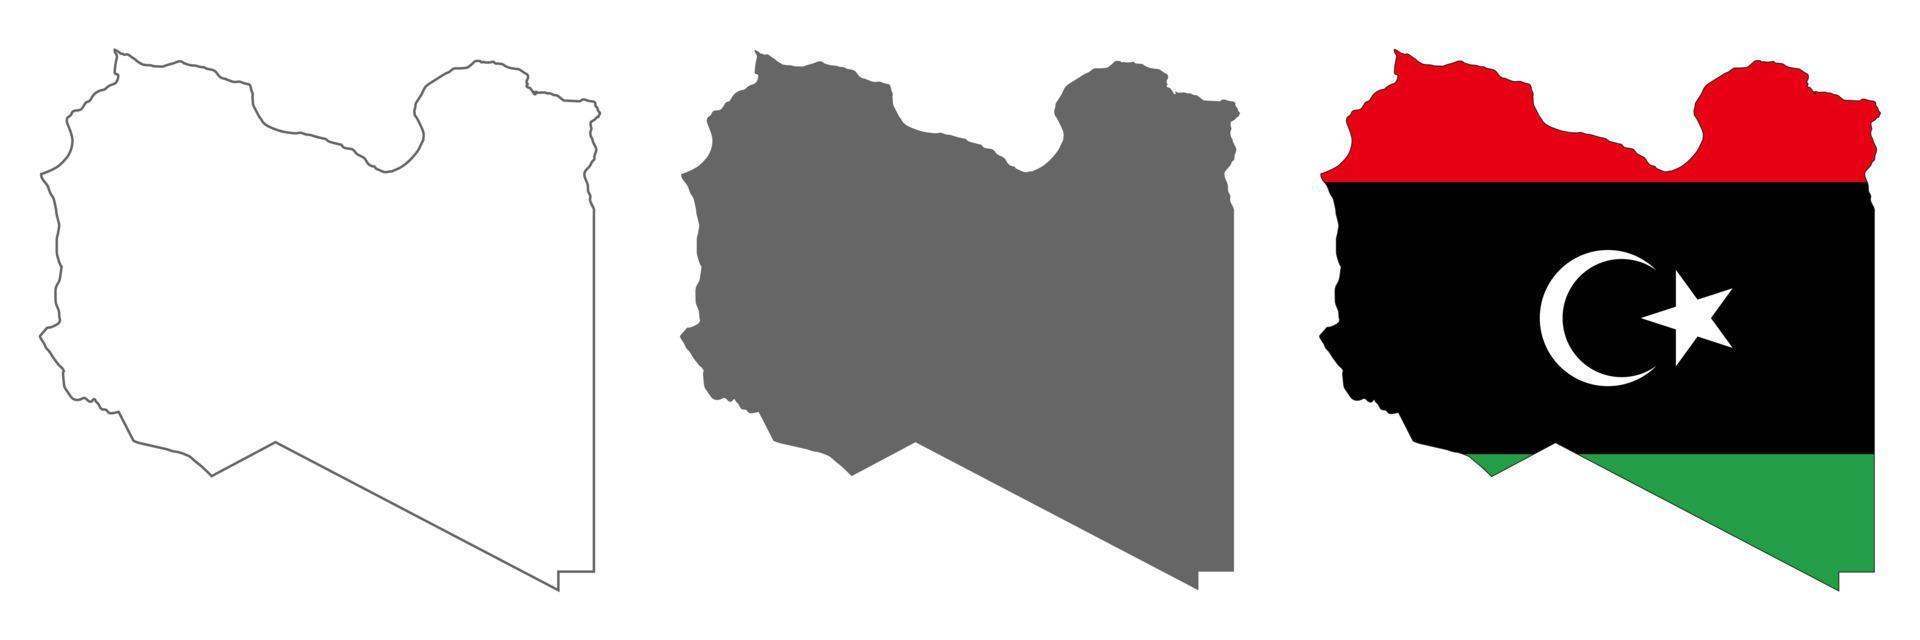 Mapa de Libia muy detallado con bordes aislados en segundo plano. vector